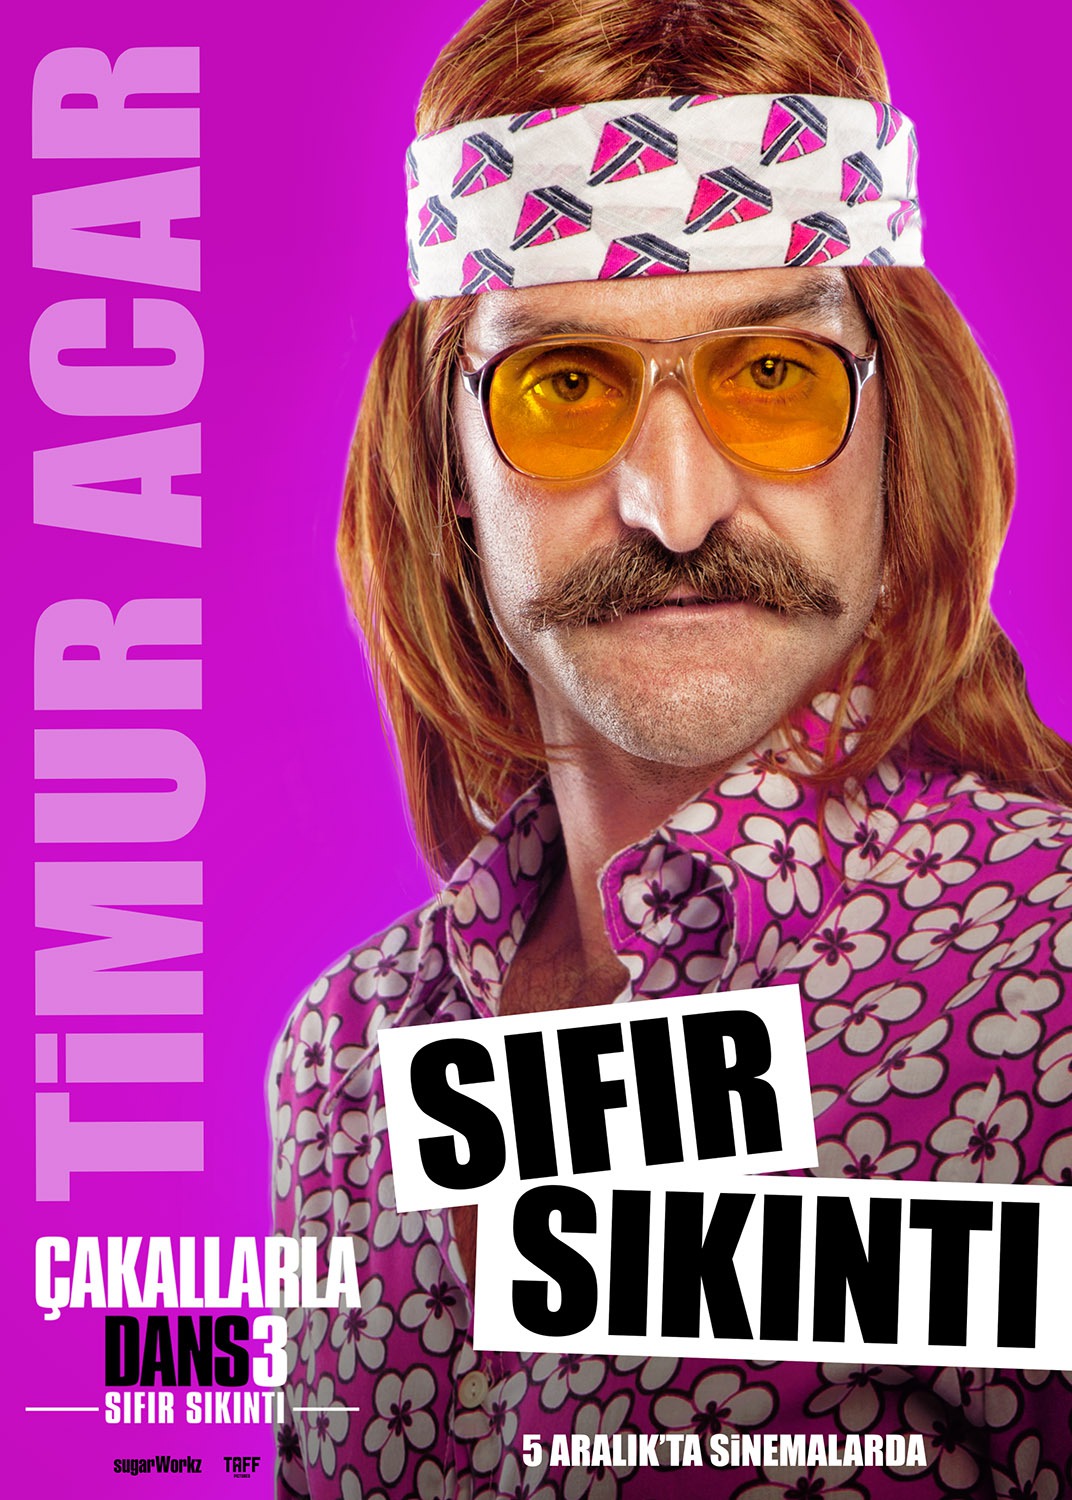 Extra Large Movie Poster Image for Çakallarla Dans 3: Sifir Sikinti (#2 of 9)